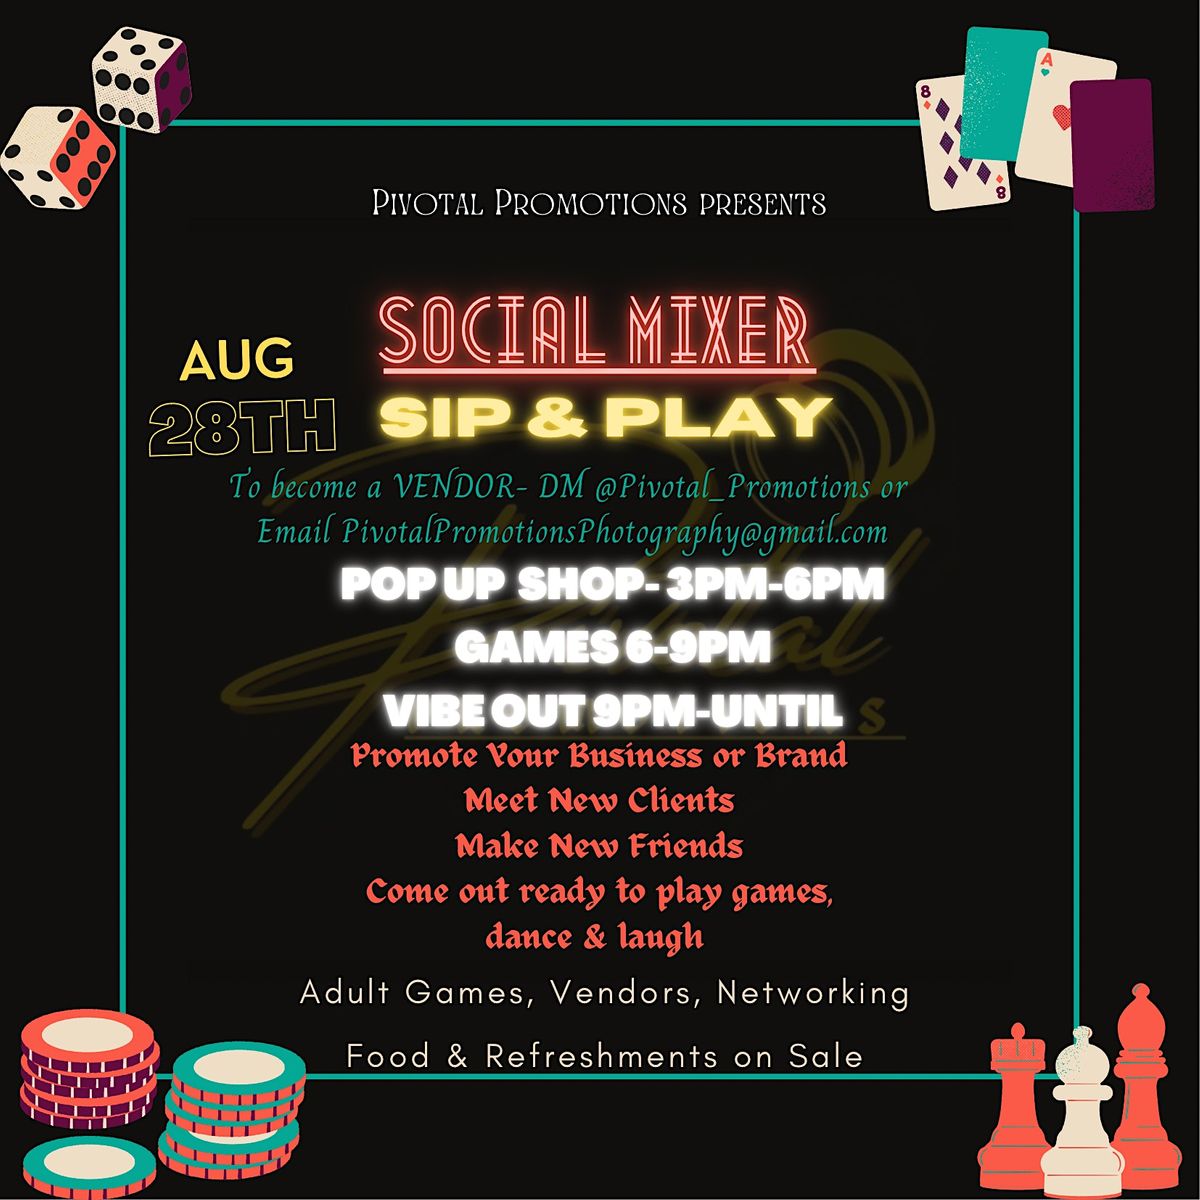 SIP & PLAY| Social Mixer